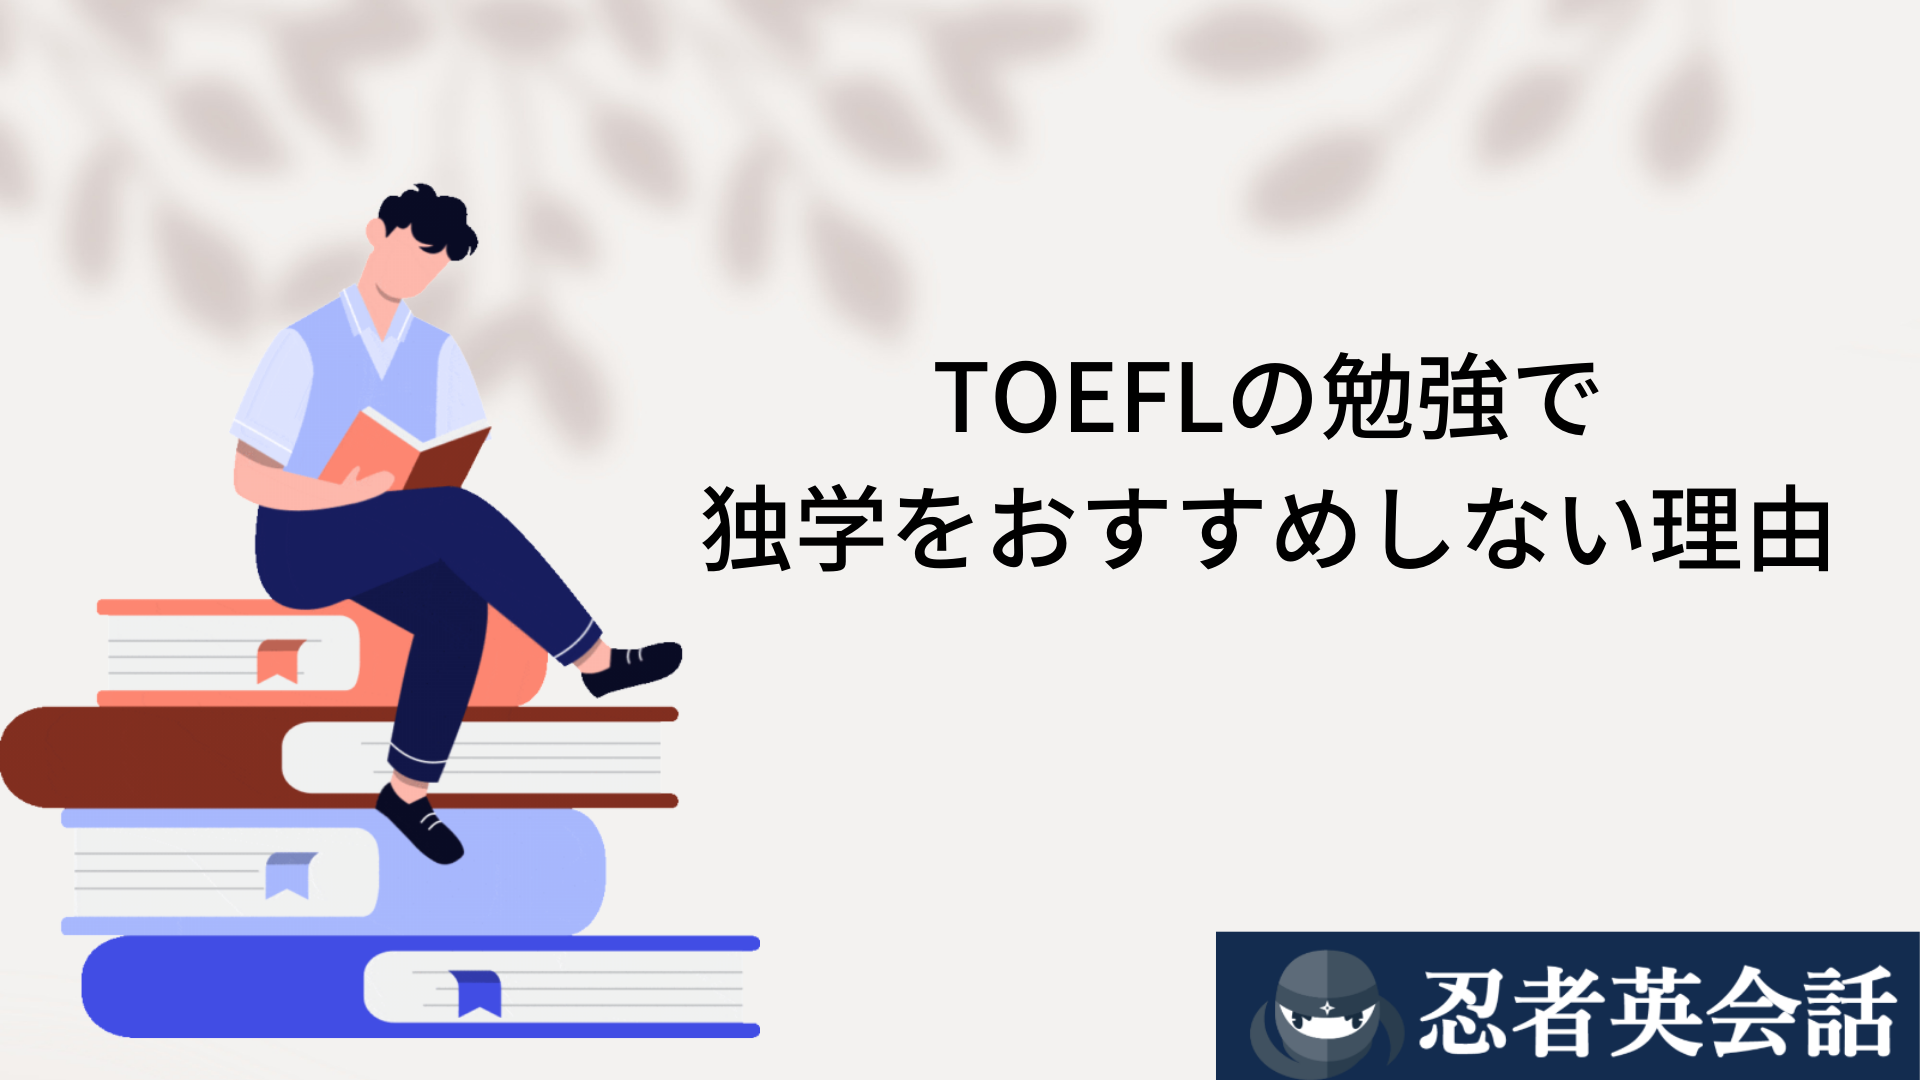 TOEFLの勉強で 独学をおすすめしない理由